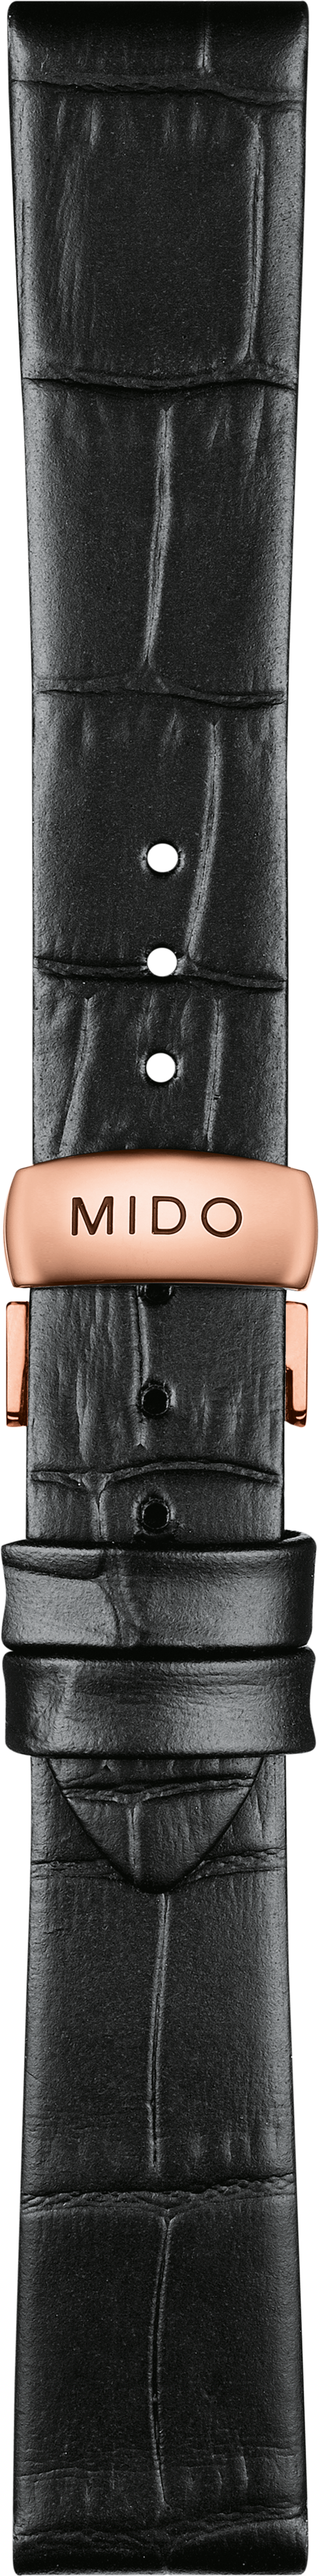 Mido Belluna black cowhide leather strap